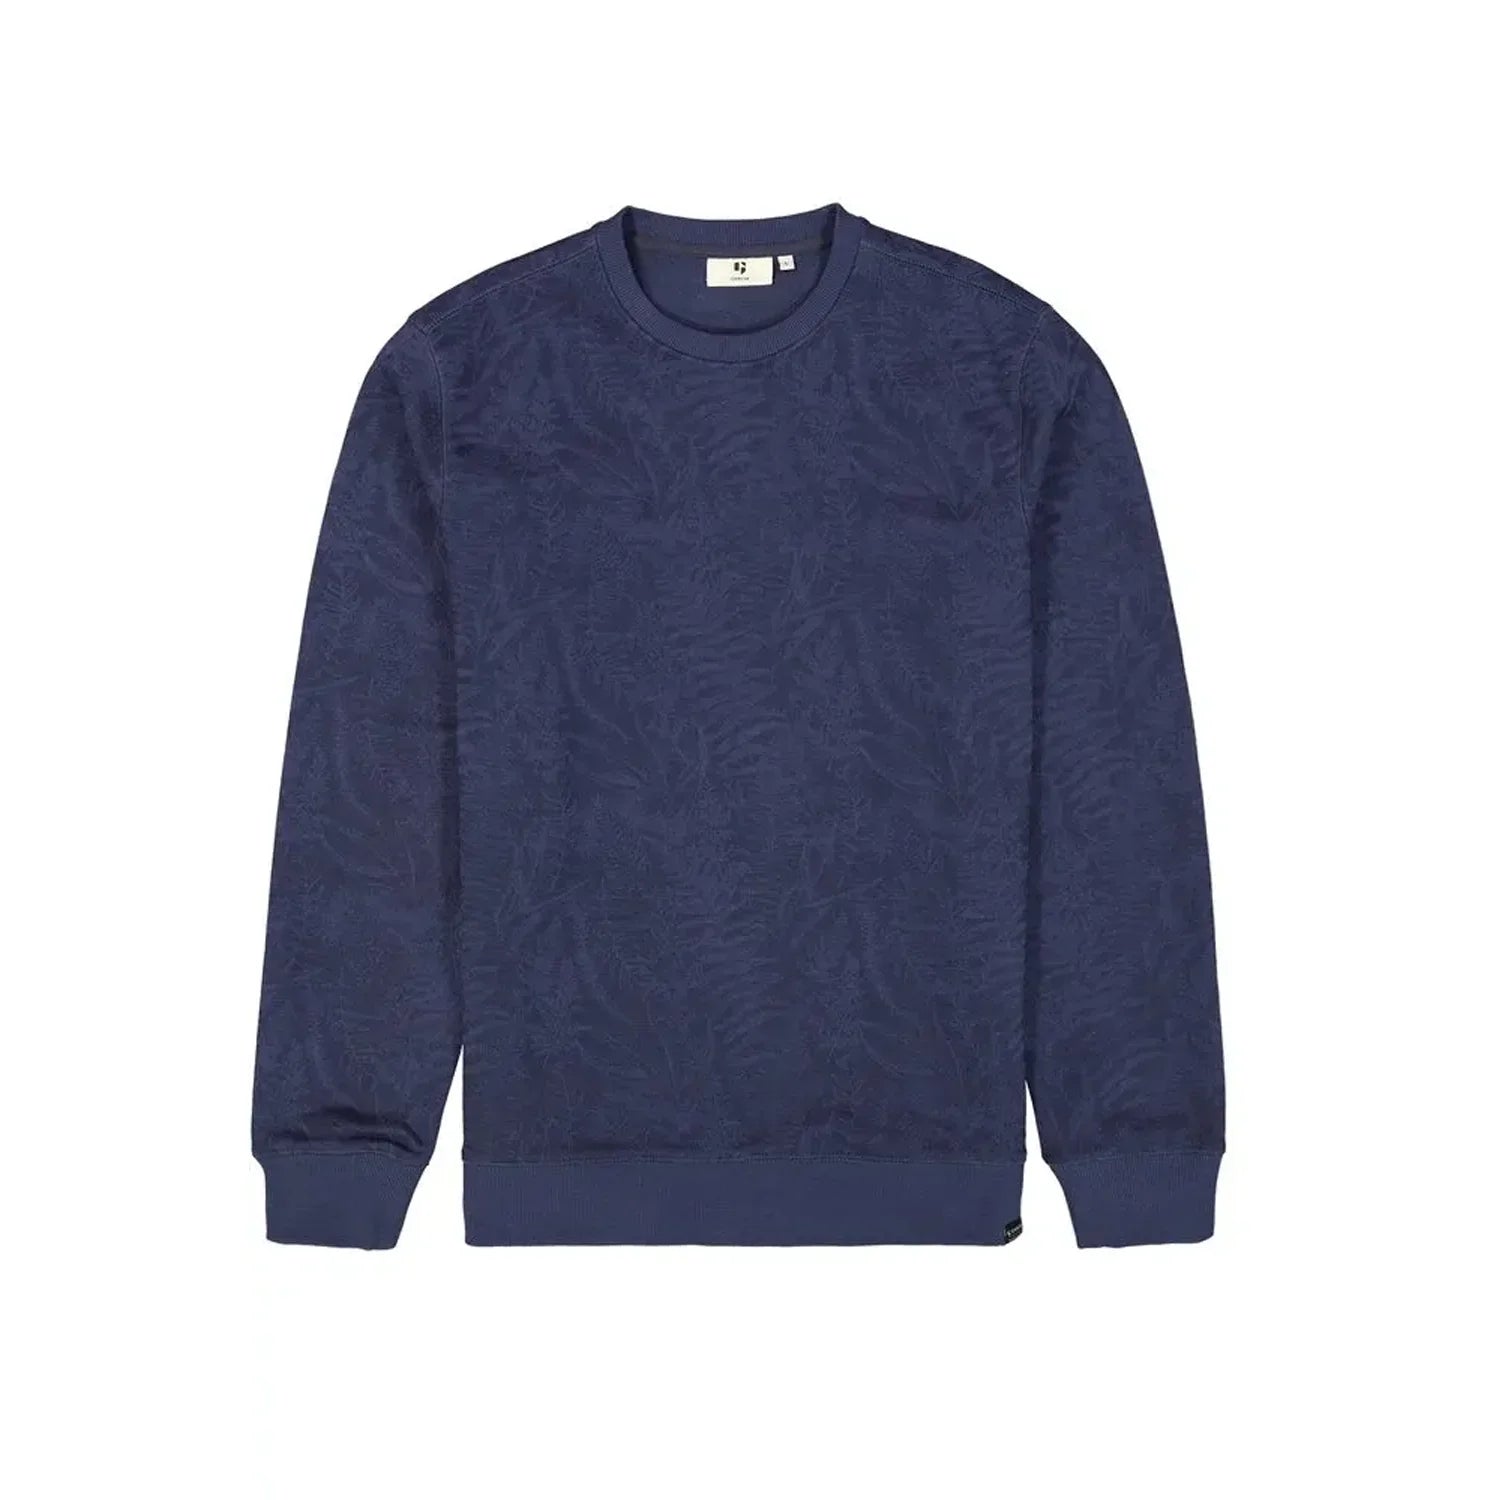 'Garcia H31062 Dark Fern Sweater' in 'Marine' colour